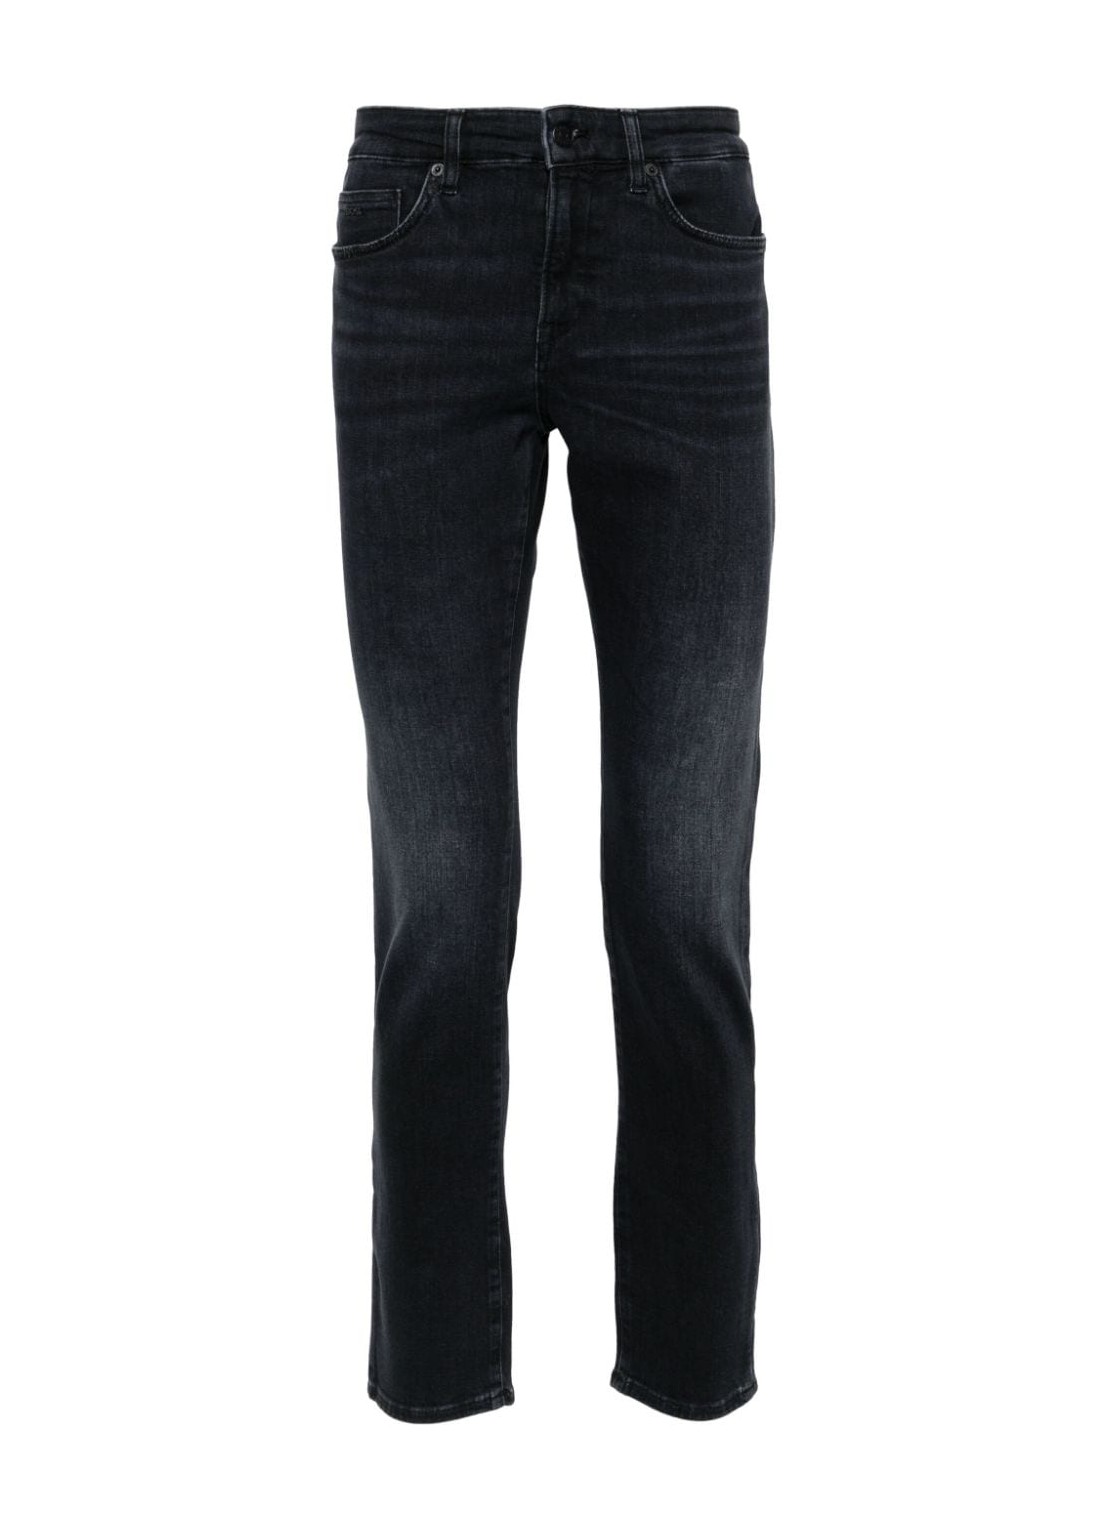 Pantalon jeans boss denim man delaware3-1 50508106 017 talla negro
 